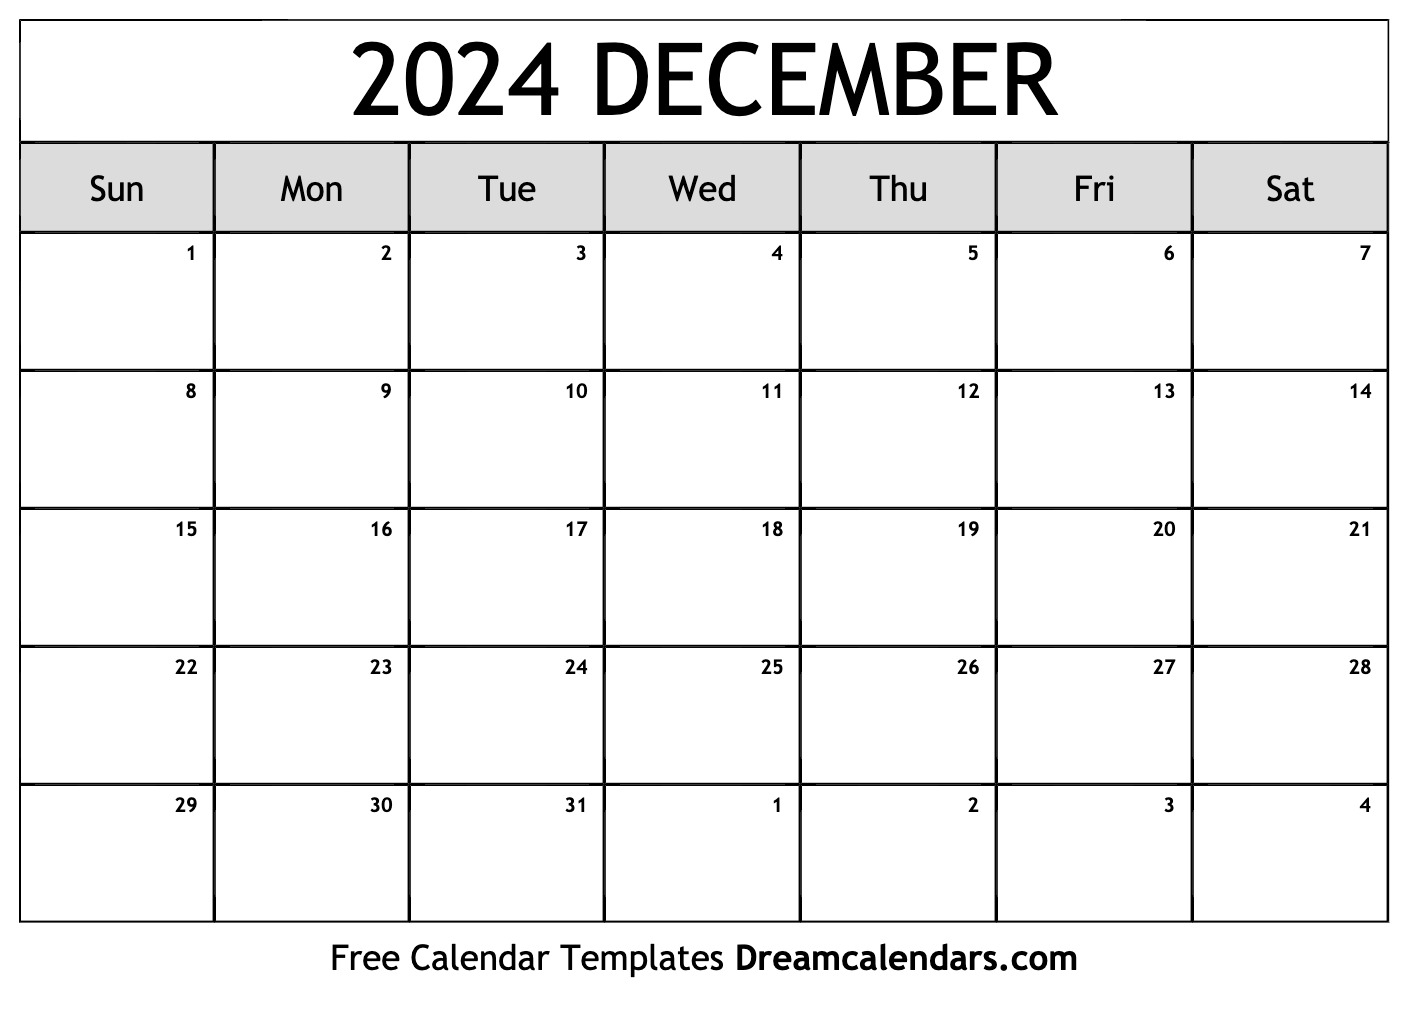 December 2024 Calendar | Free Blank Printable With Holidays for December 2024 Calendar Free Printable